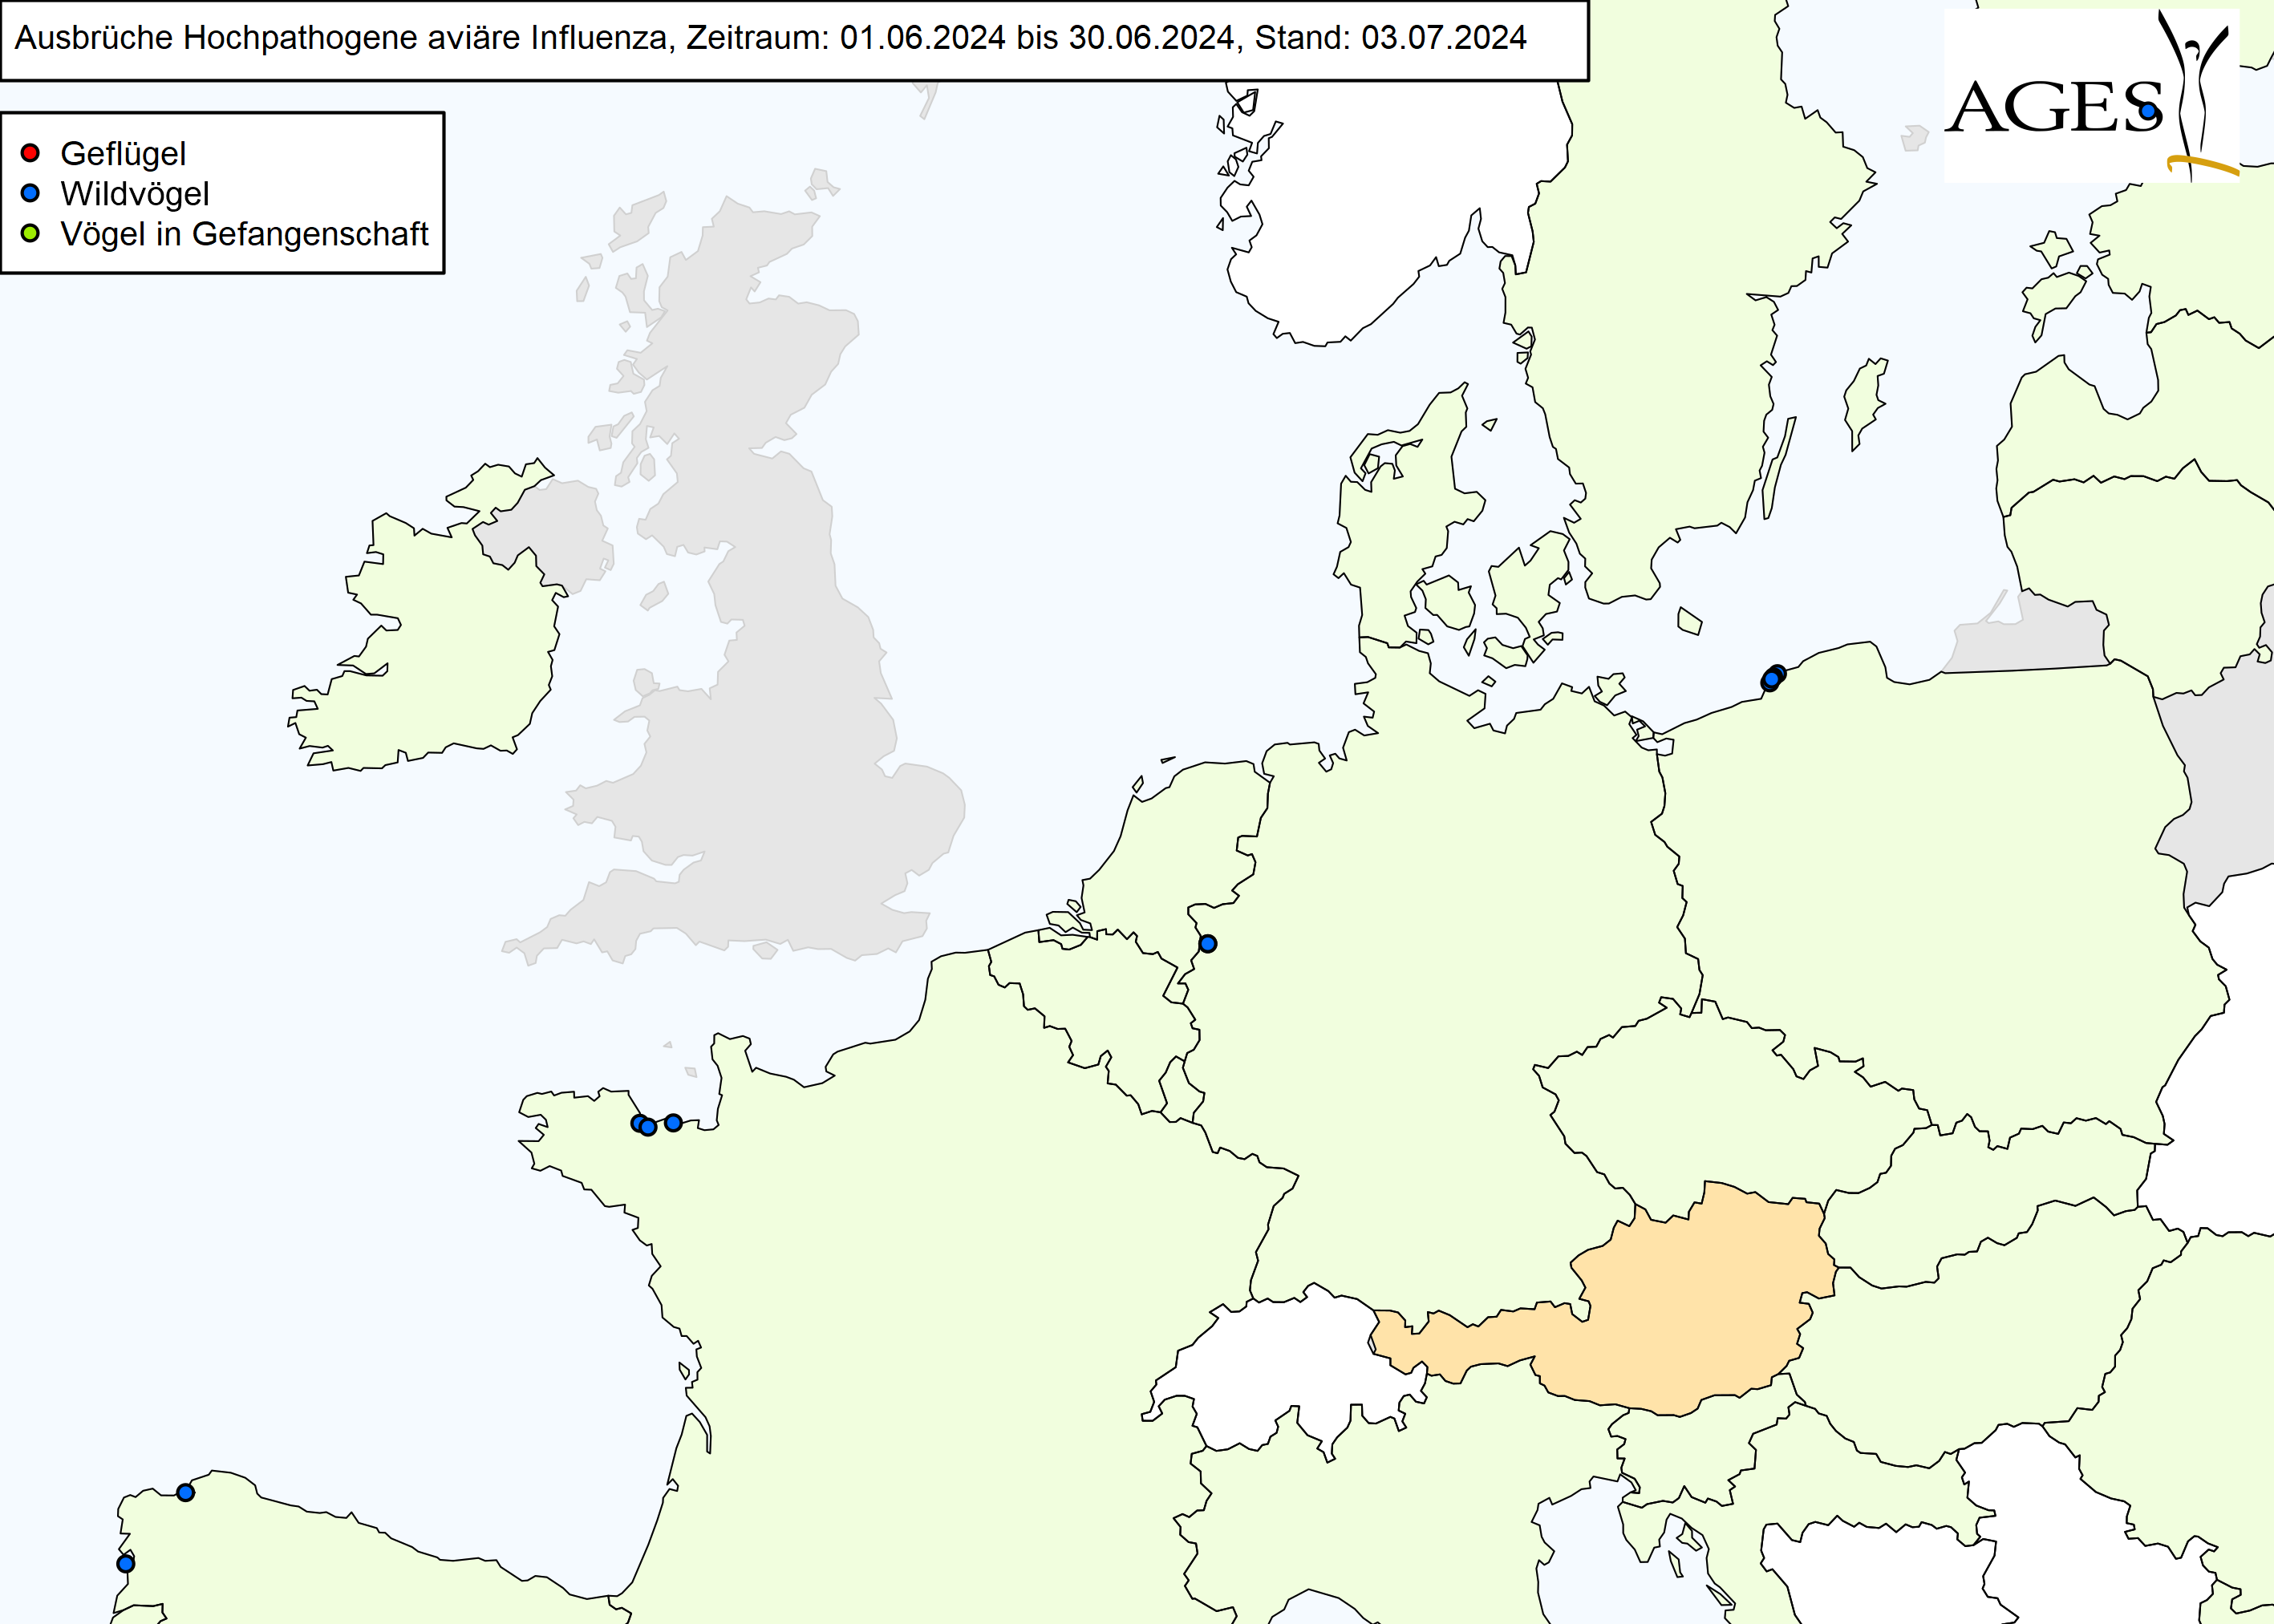 Europakarte zu HPAI-Ausbrüchen wie in "Situation in Europa" beschrieben.